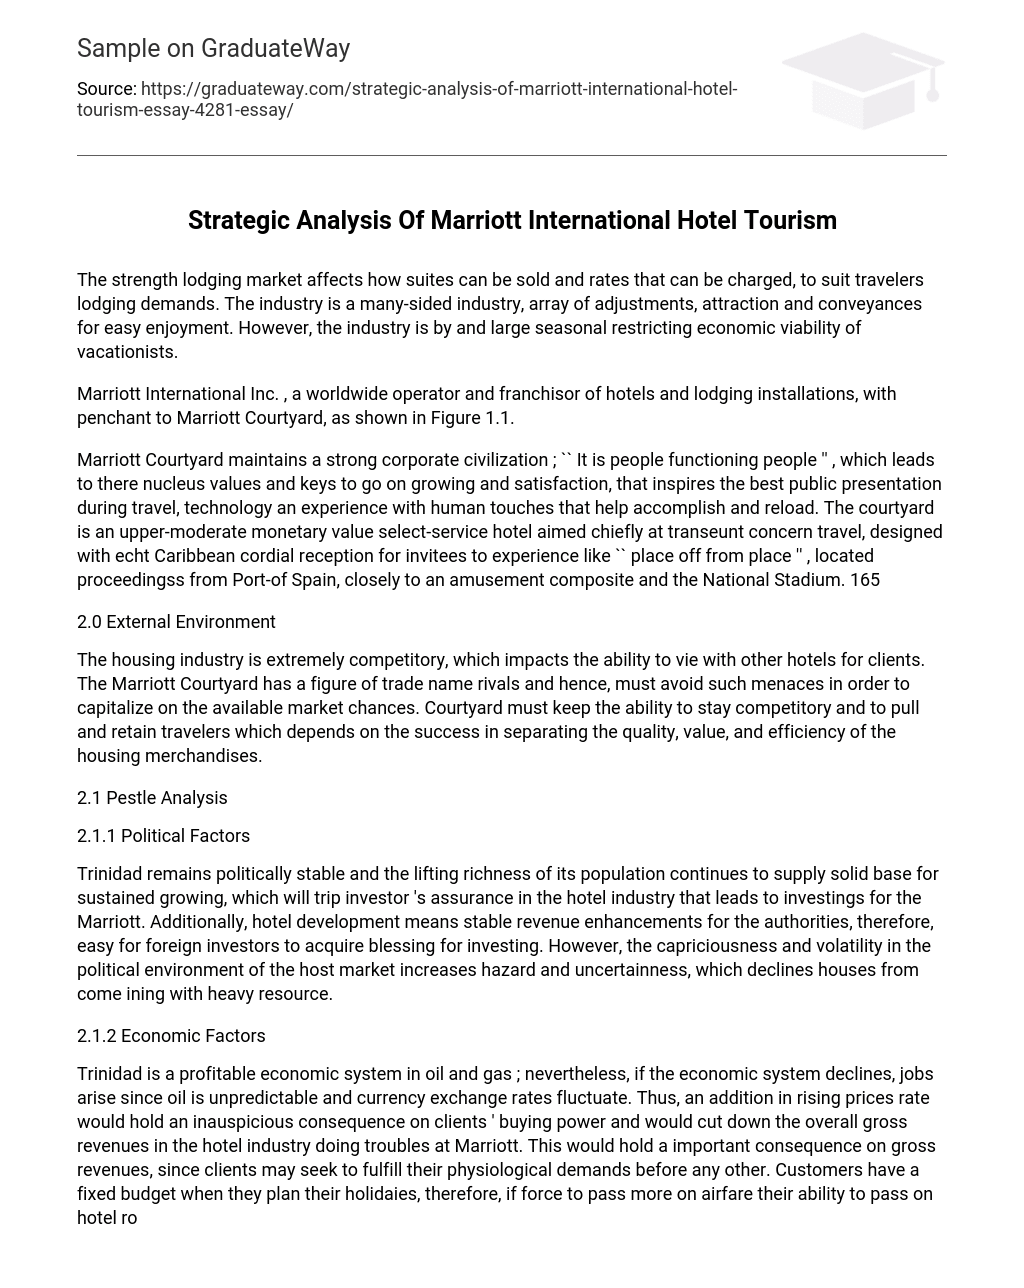 Strategic Analysis Of Marriott International Hotel Tourism